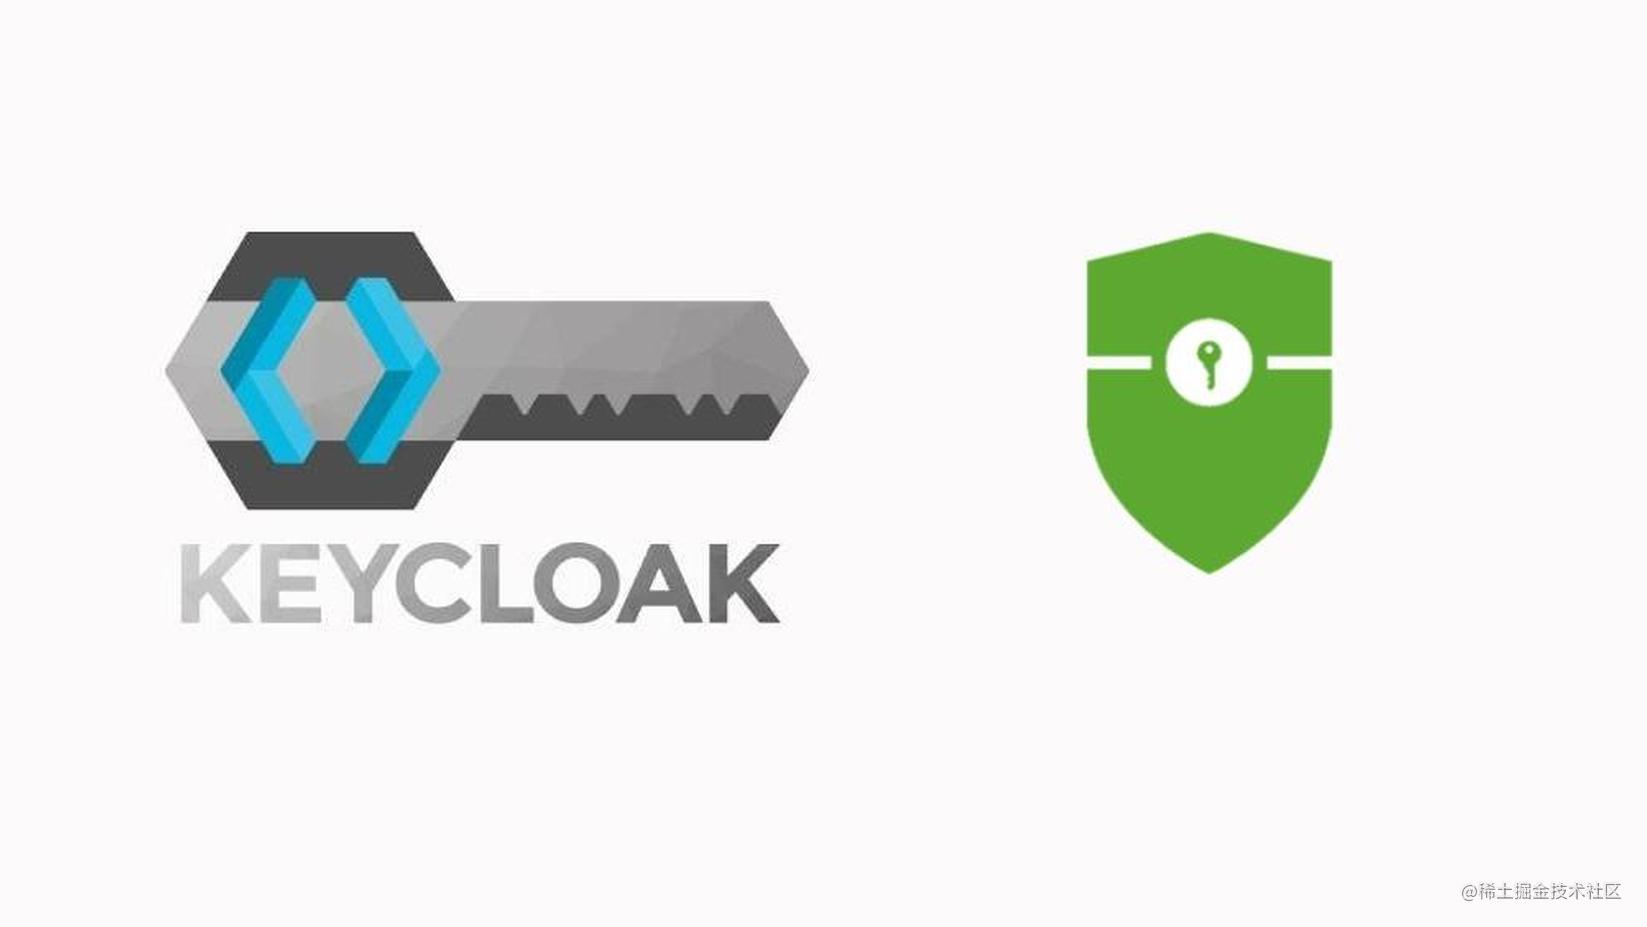 Spring Security 中使用Keycloak作为认证授权服务器